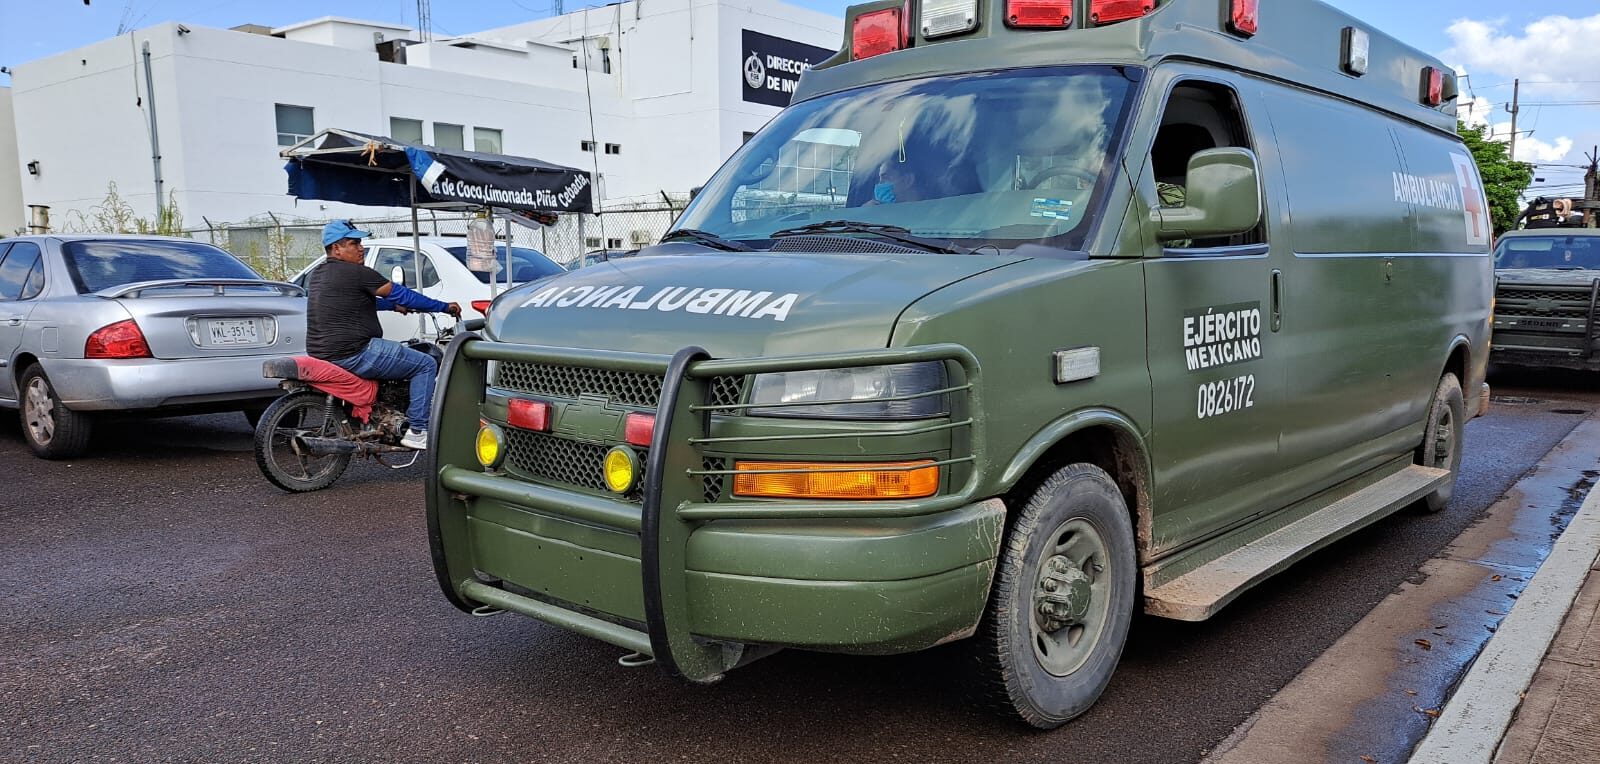 Ambulancia del Ejército Mexicano.